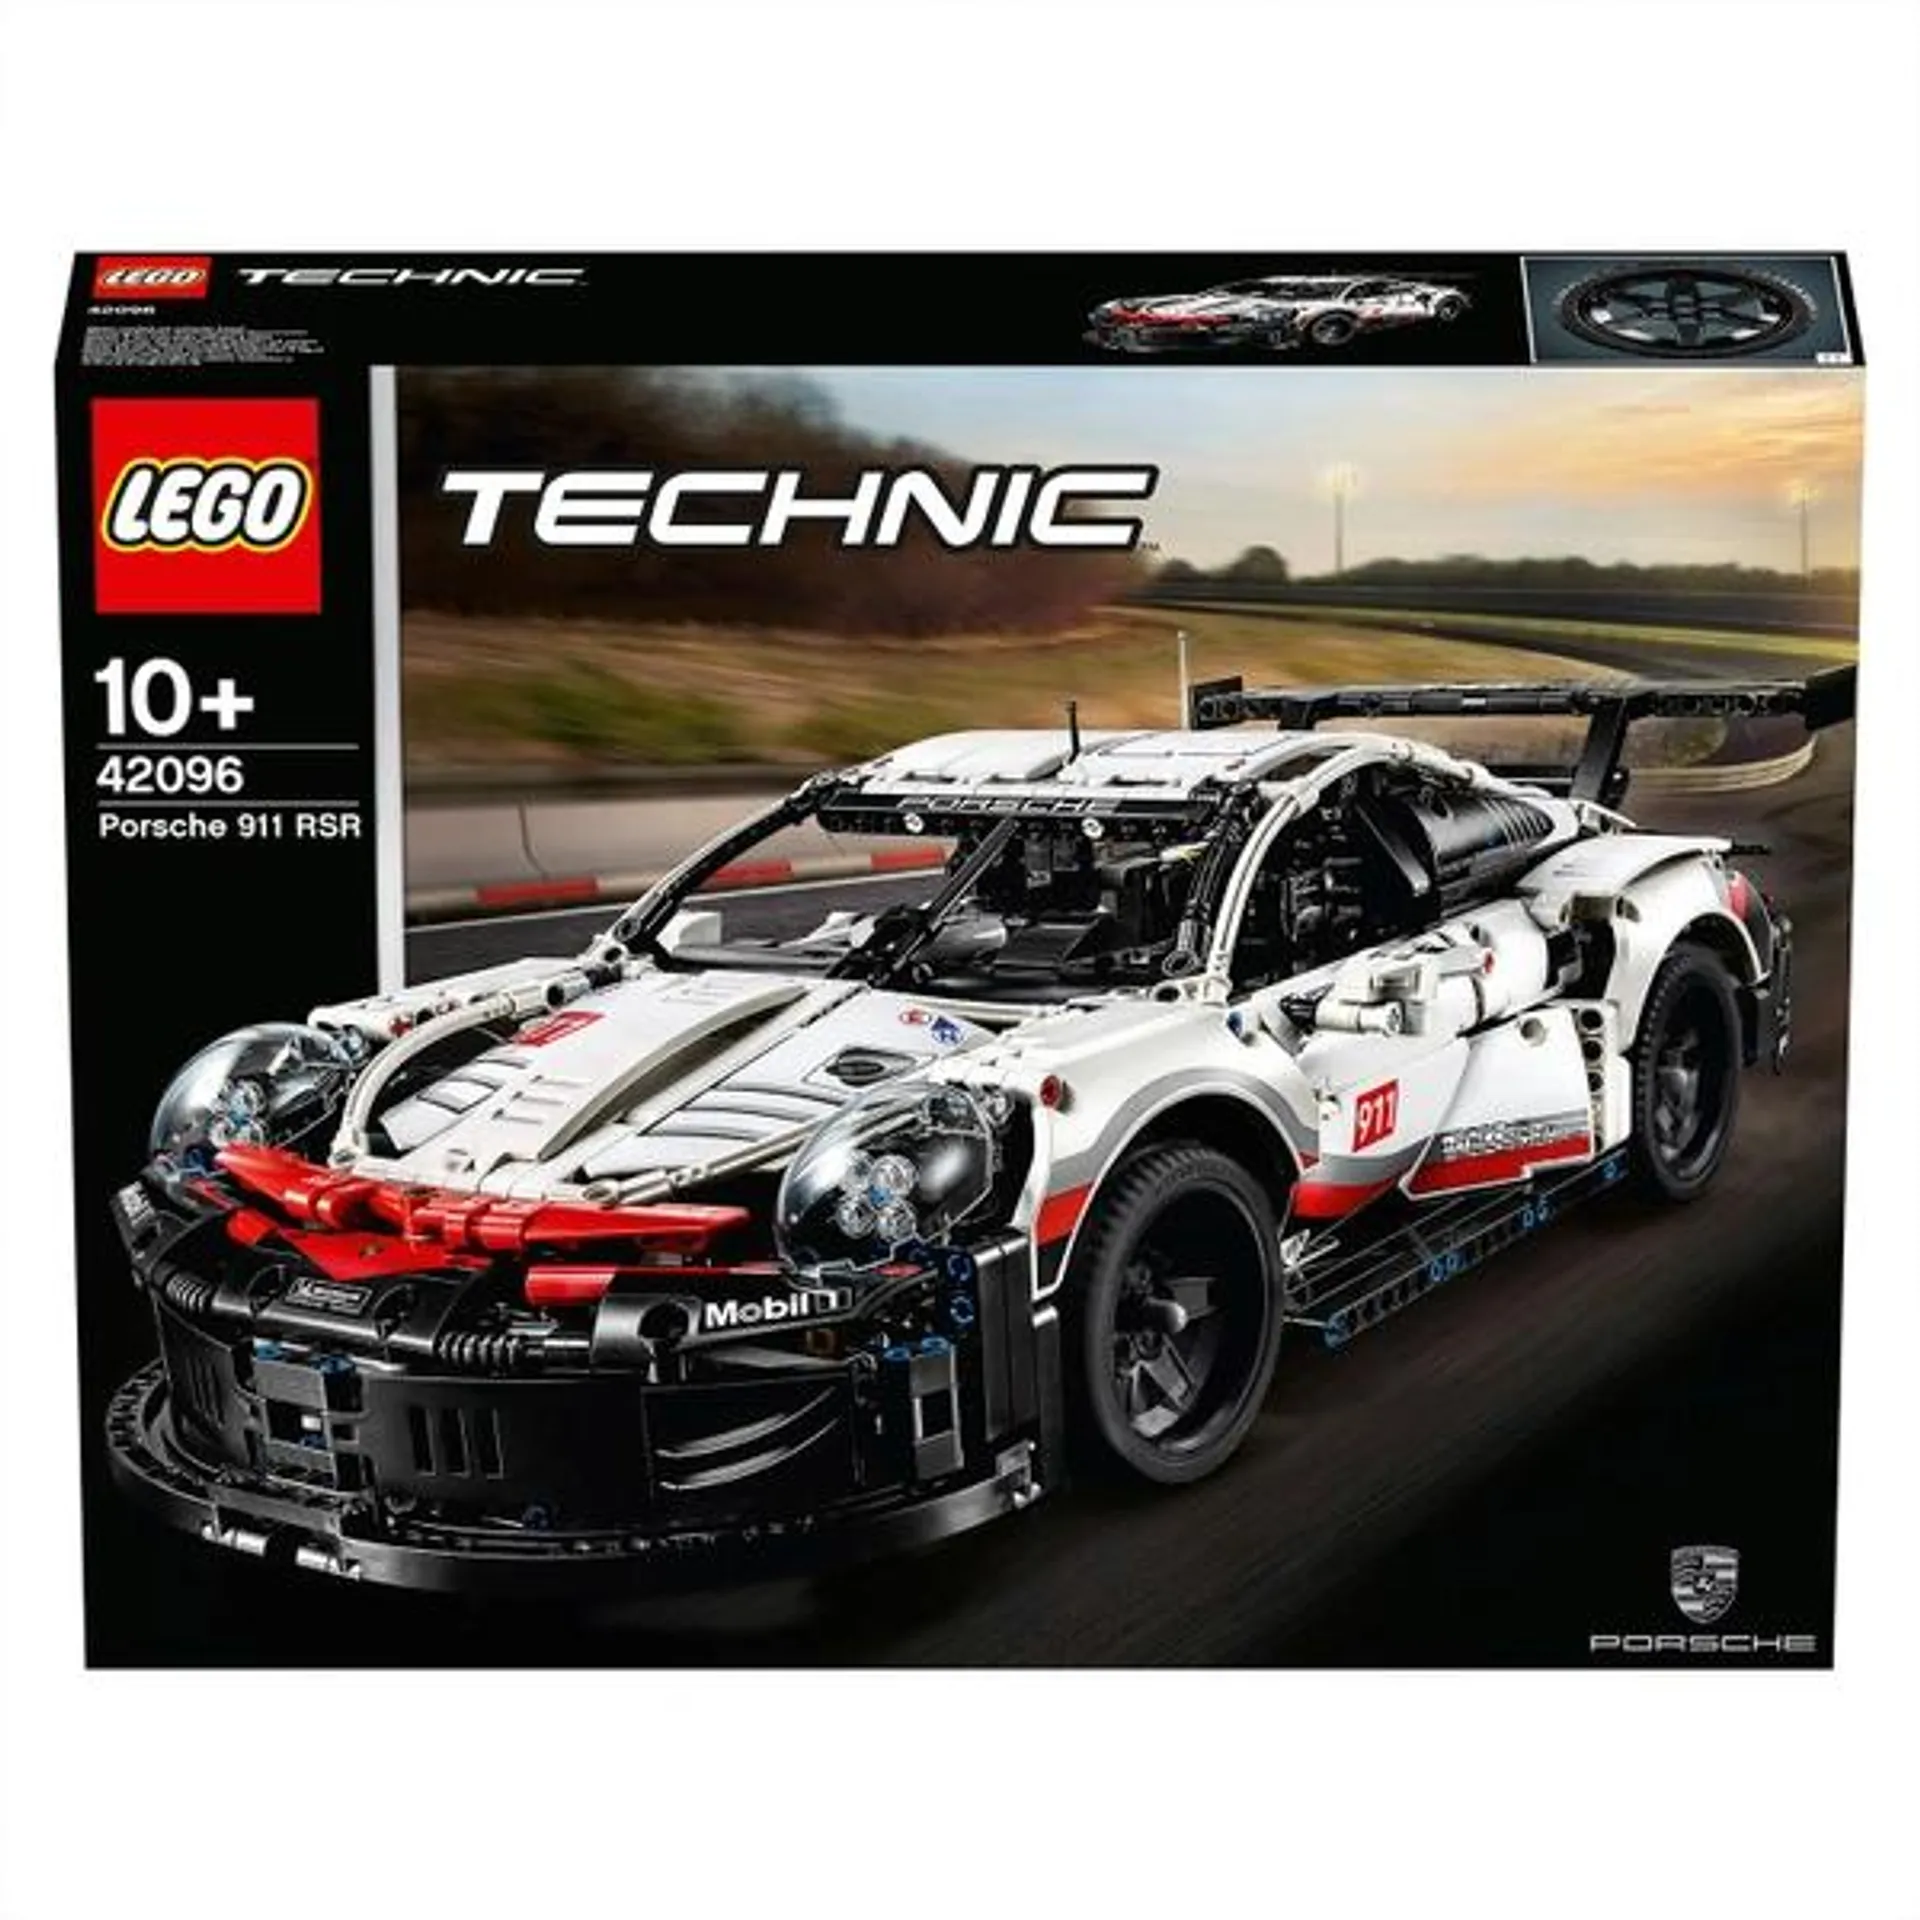 LEGO Technic 42096 Porsche 911 RSR Racing Car Toy Model Set